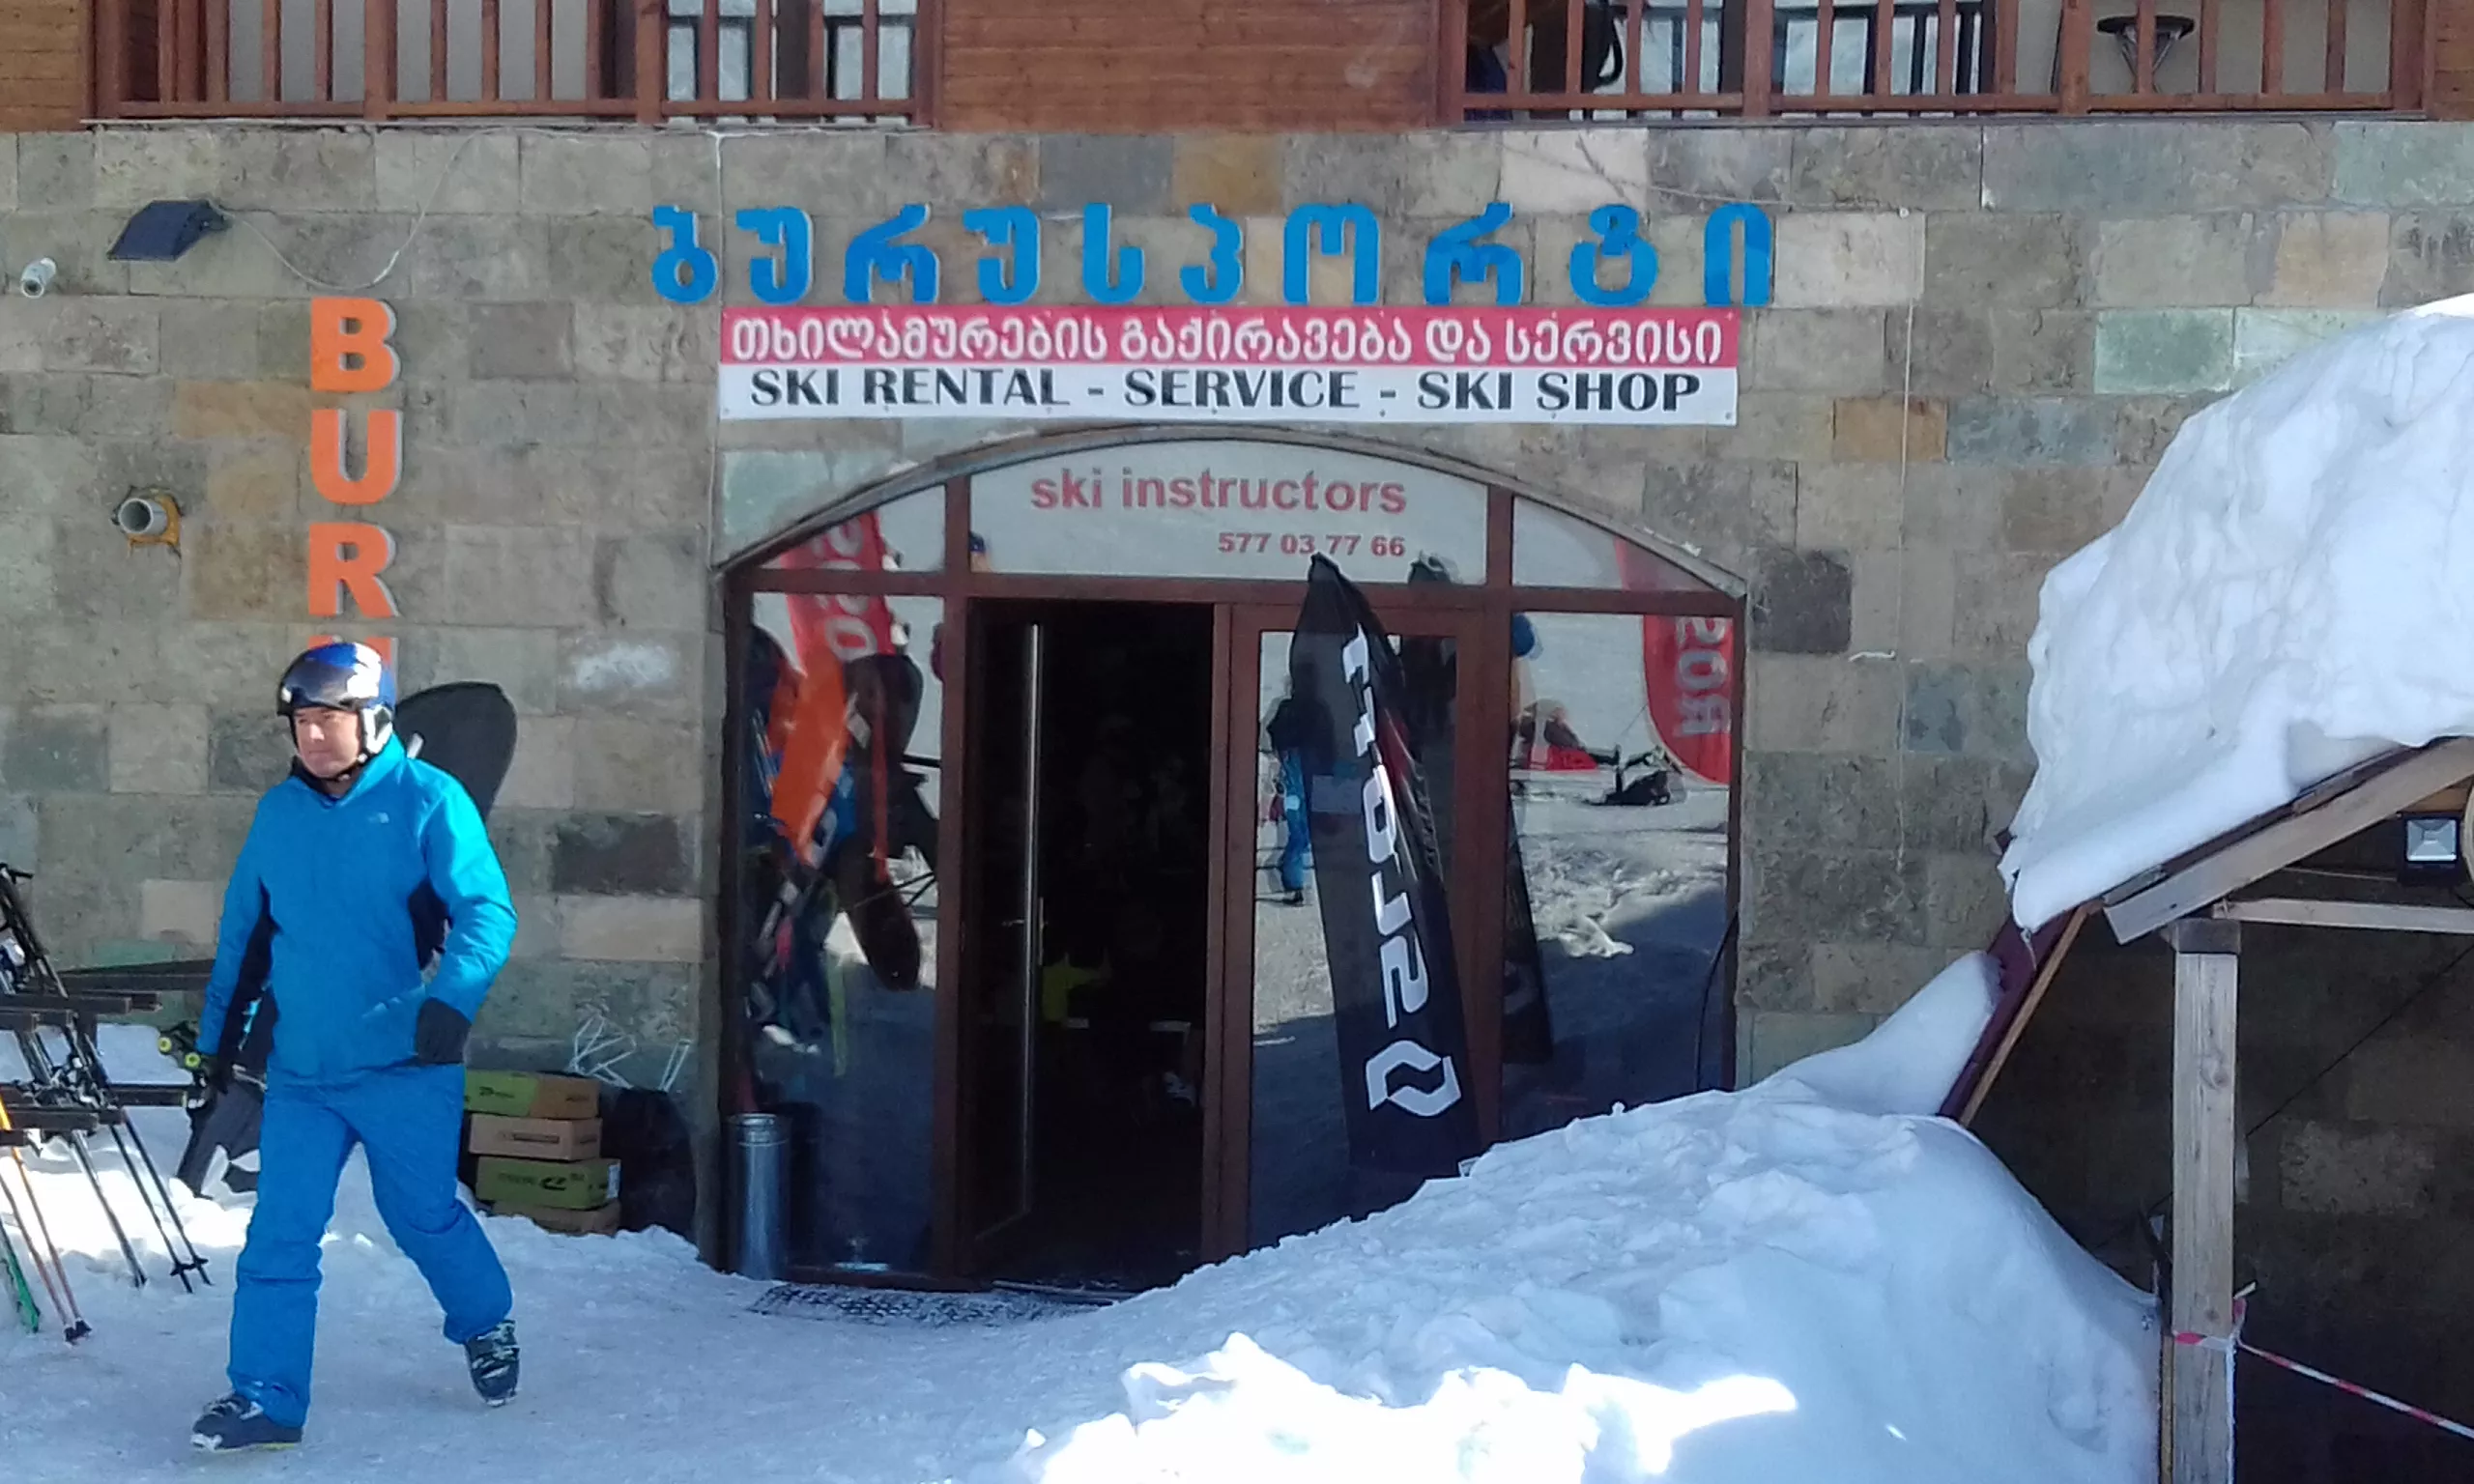 Gudauri Ski Rent in Georgia, Europe | Snowboarding,Skiing - Rated 0.8